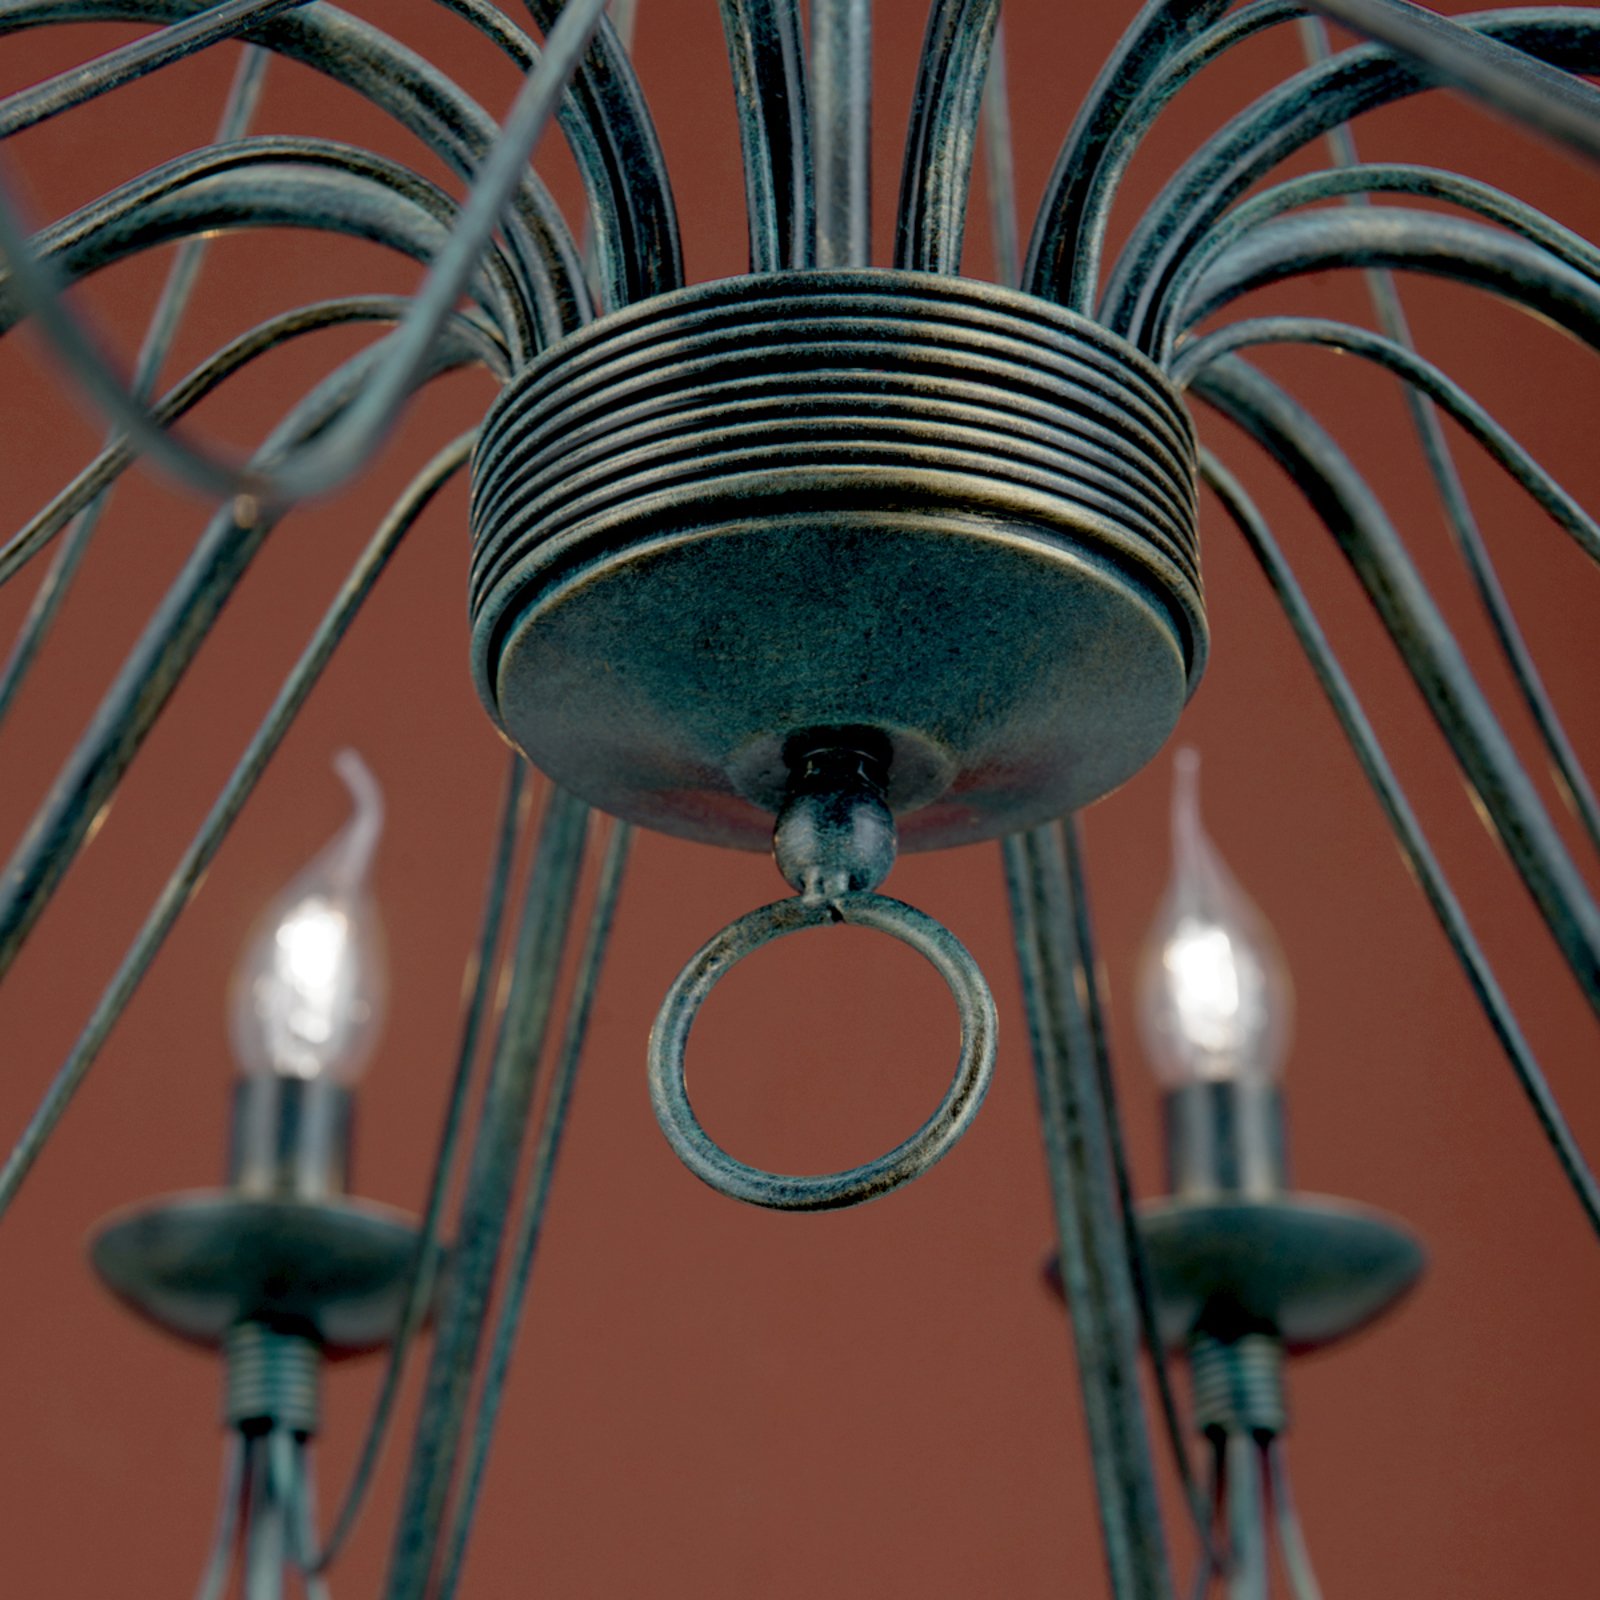 Antique designed chandelier Antonina